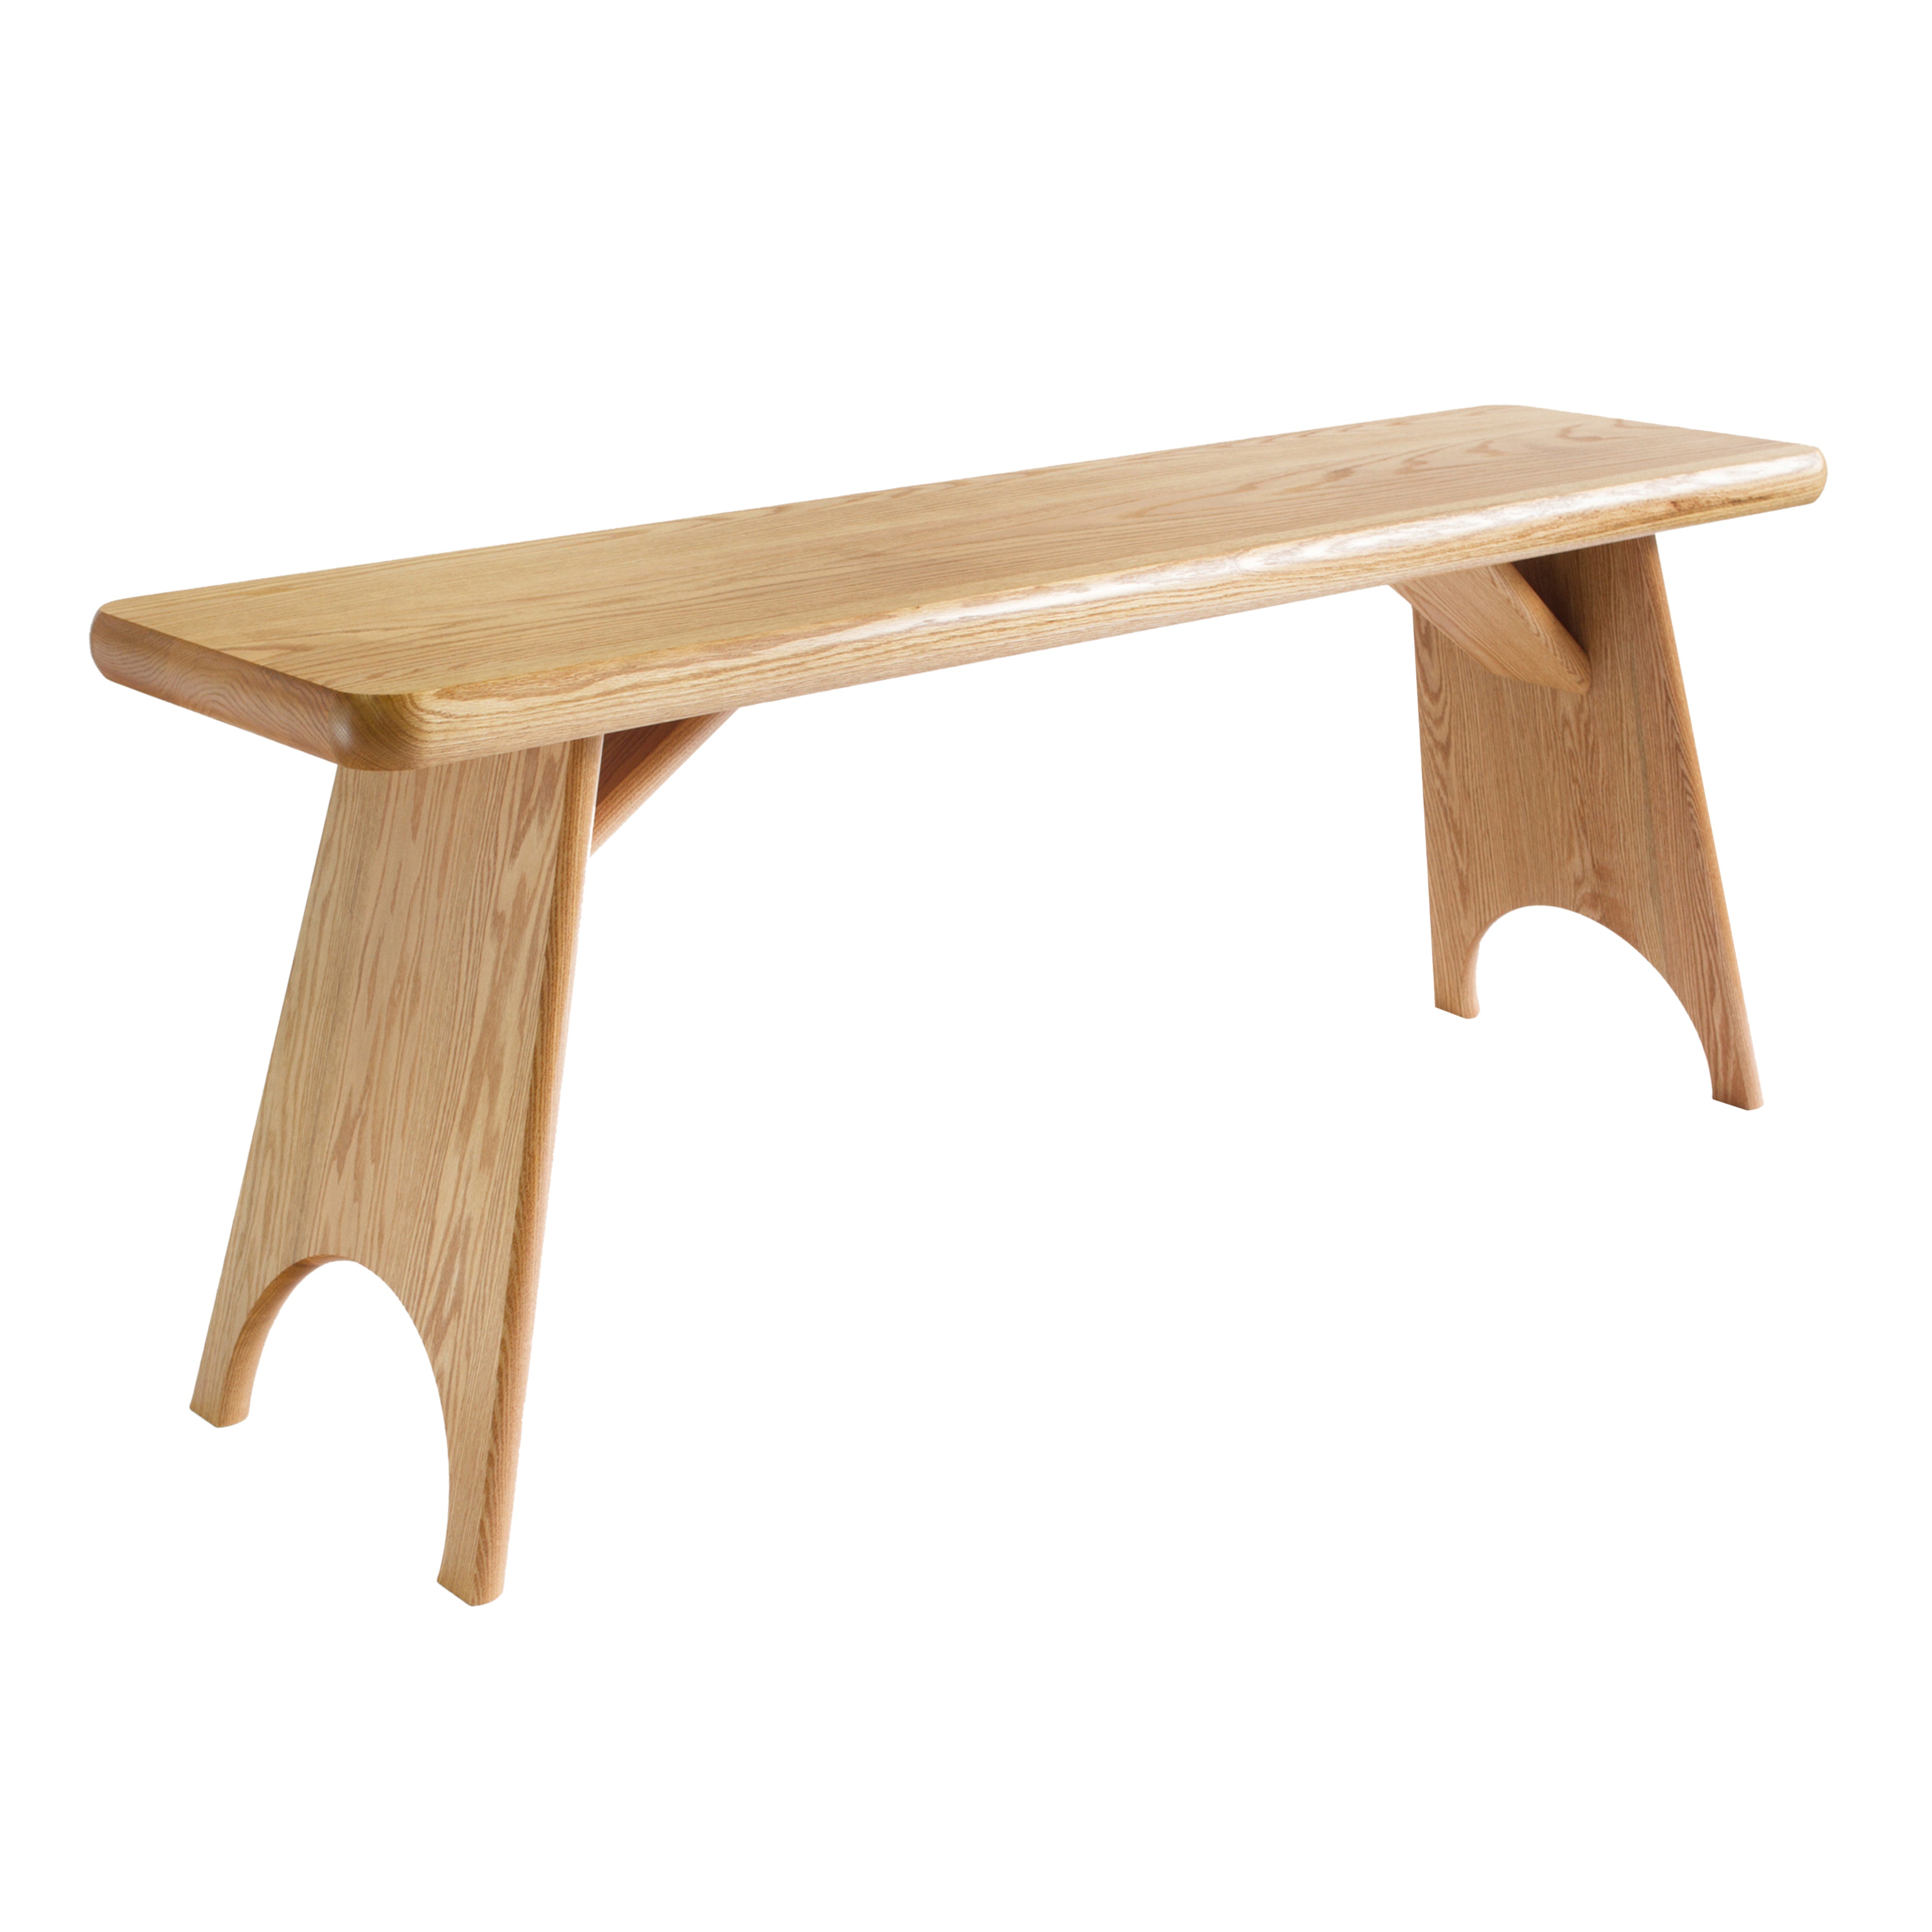 Merton Table: Oak